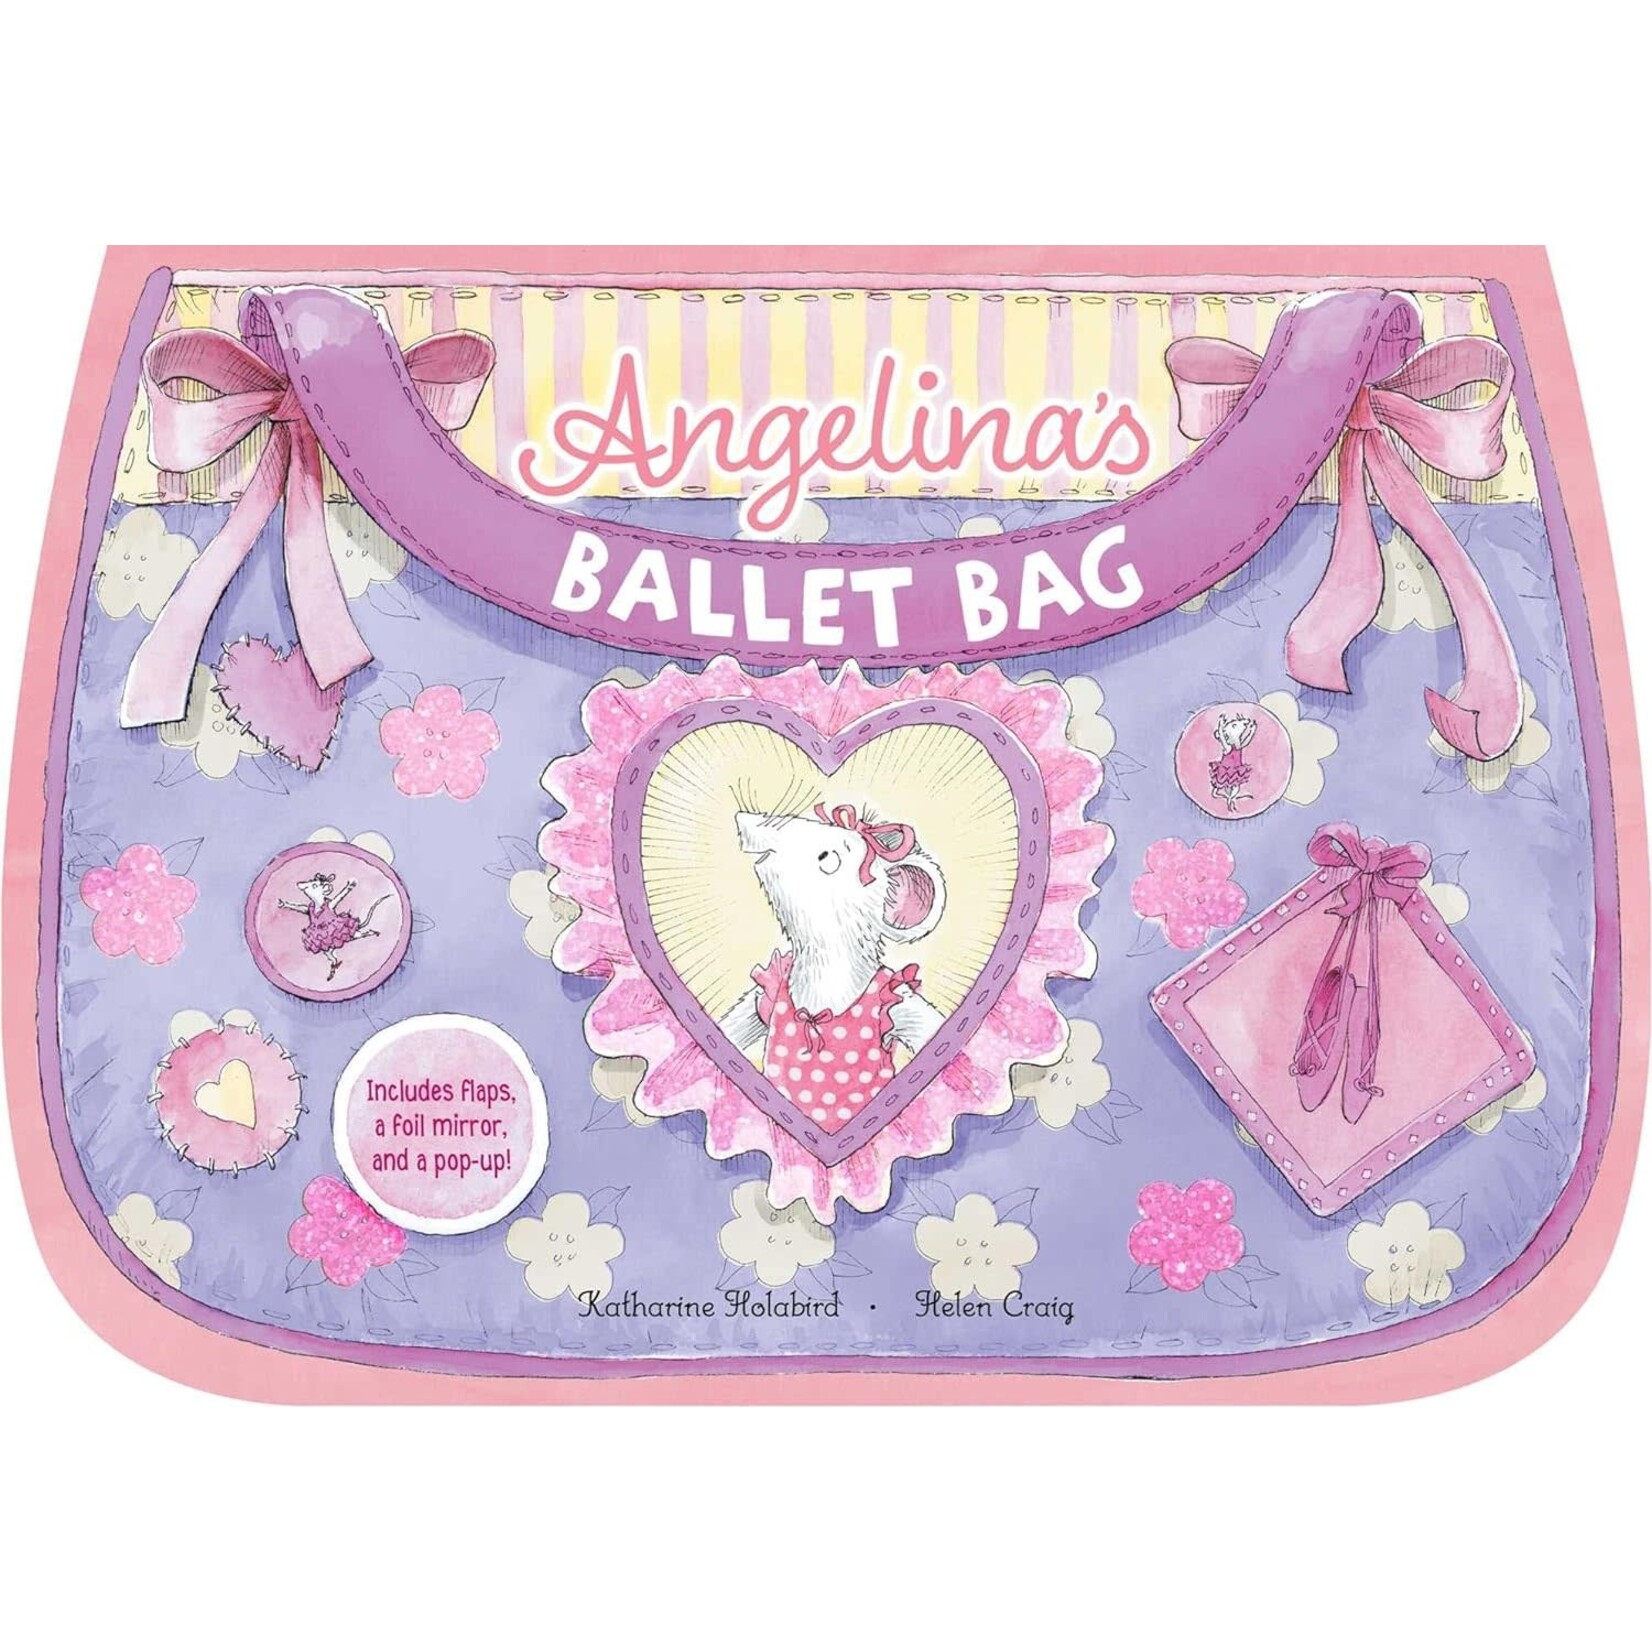 Simon & Schuster Angelina's Ballet Bag